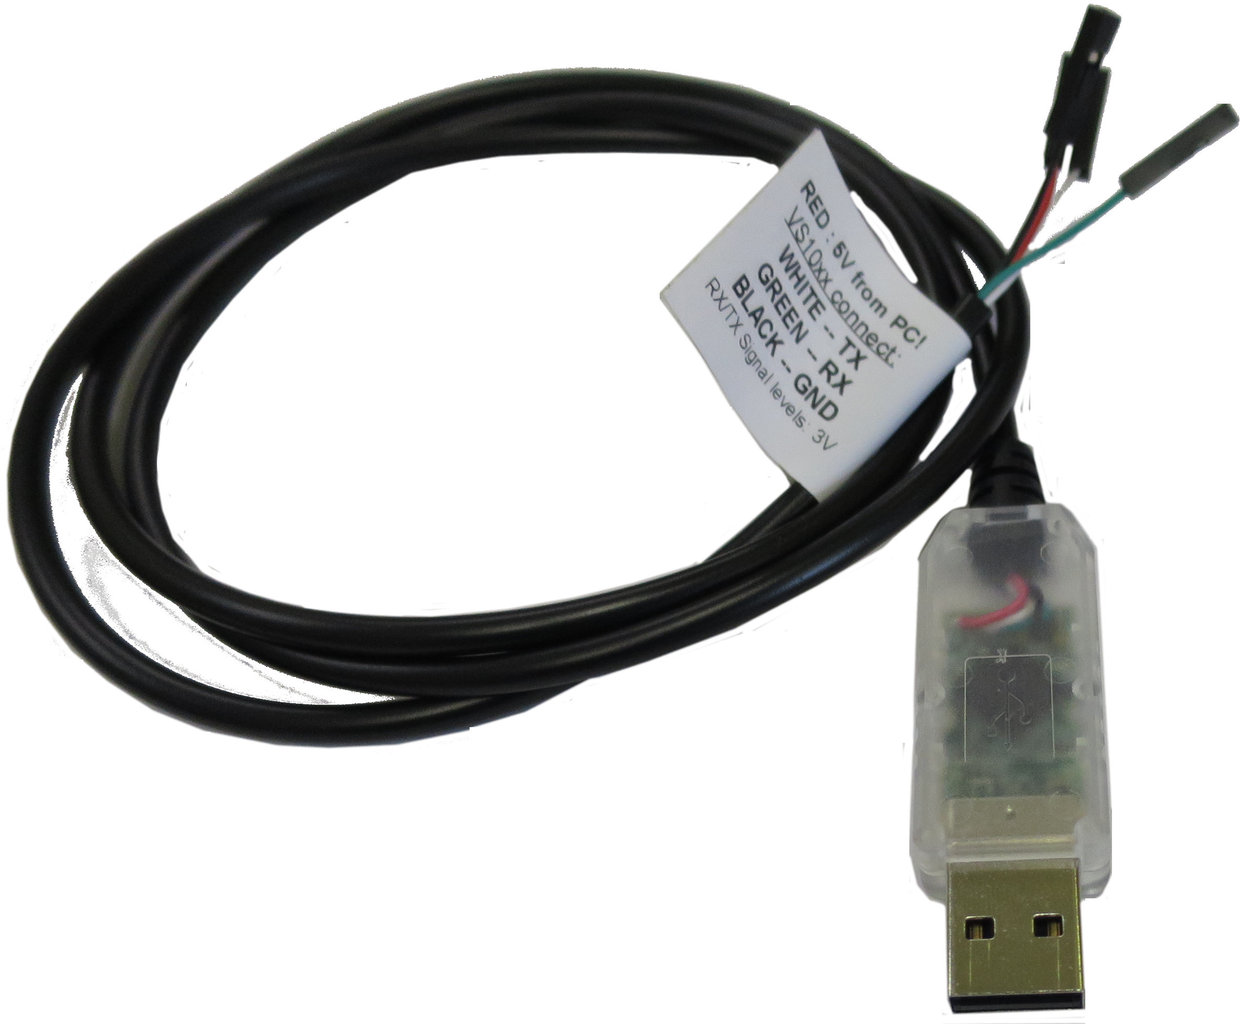 VS1010 USB-UART Adapter